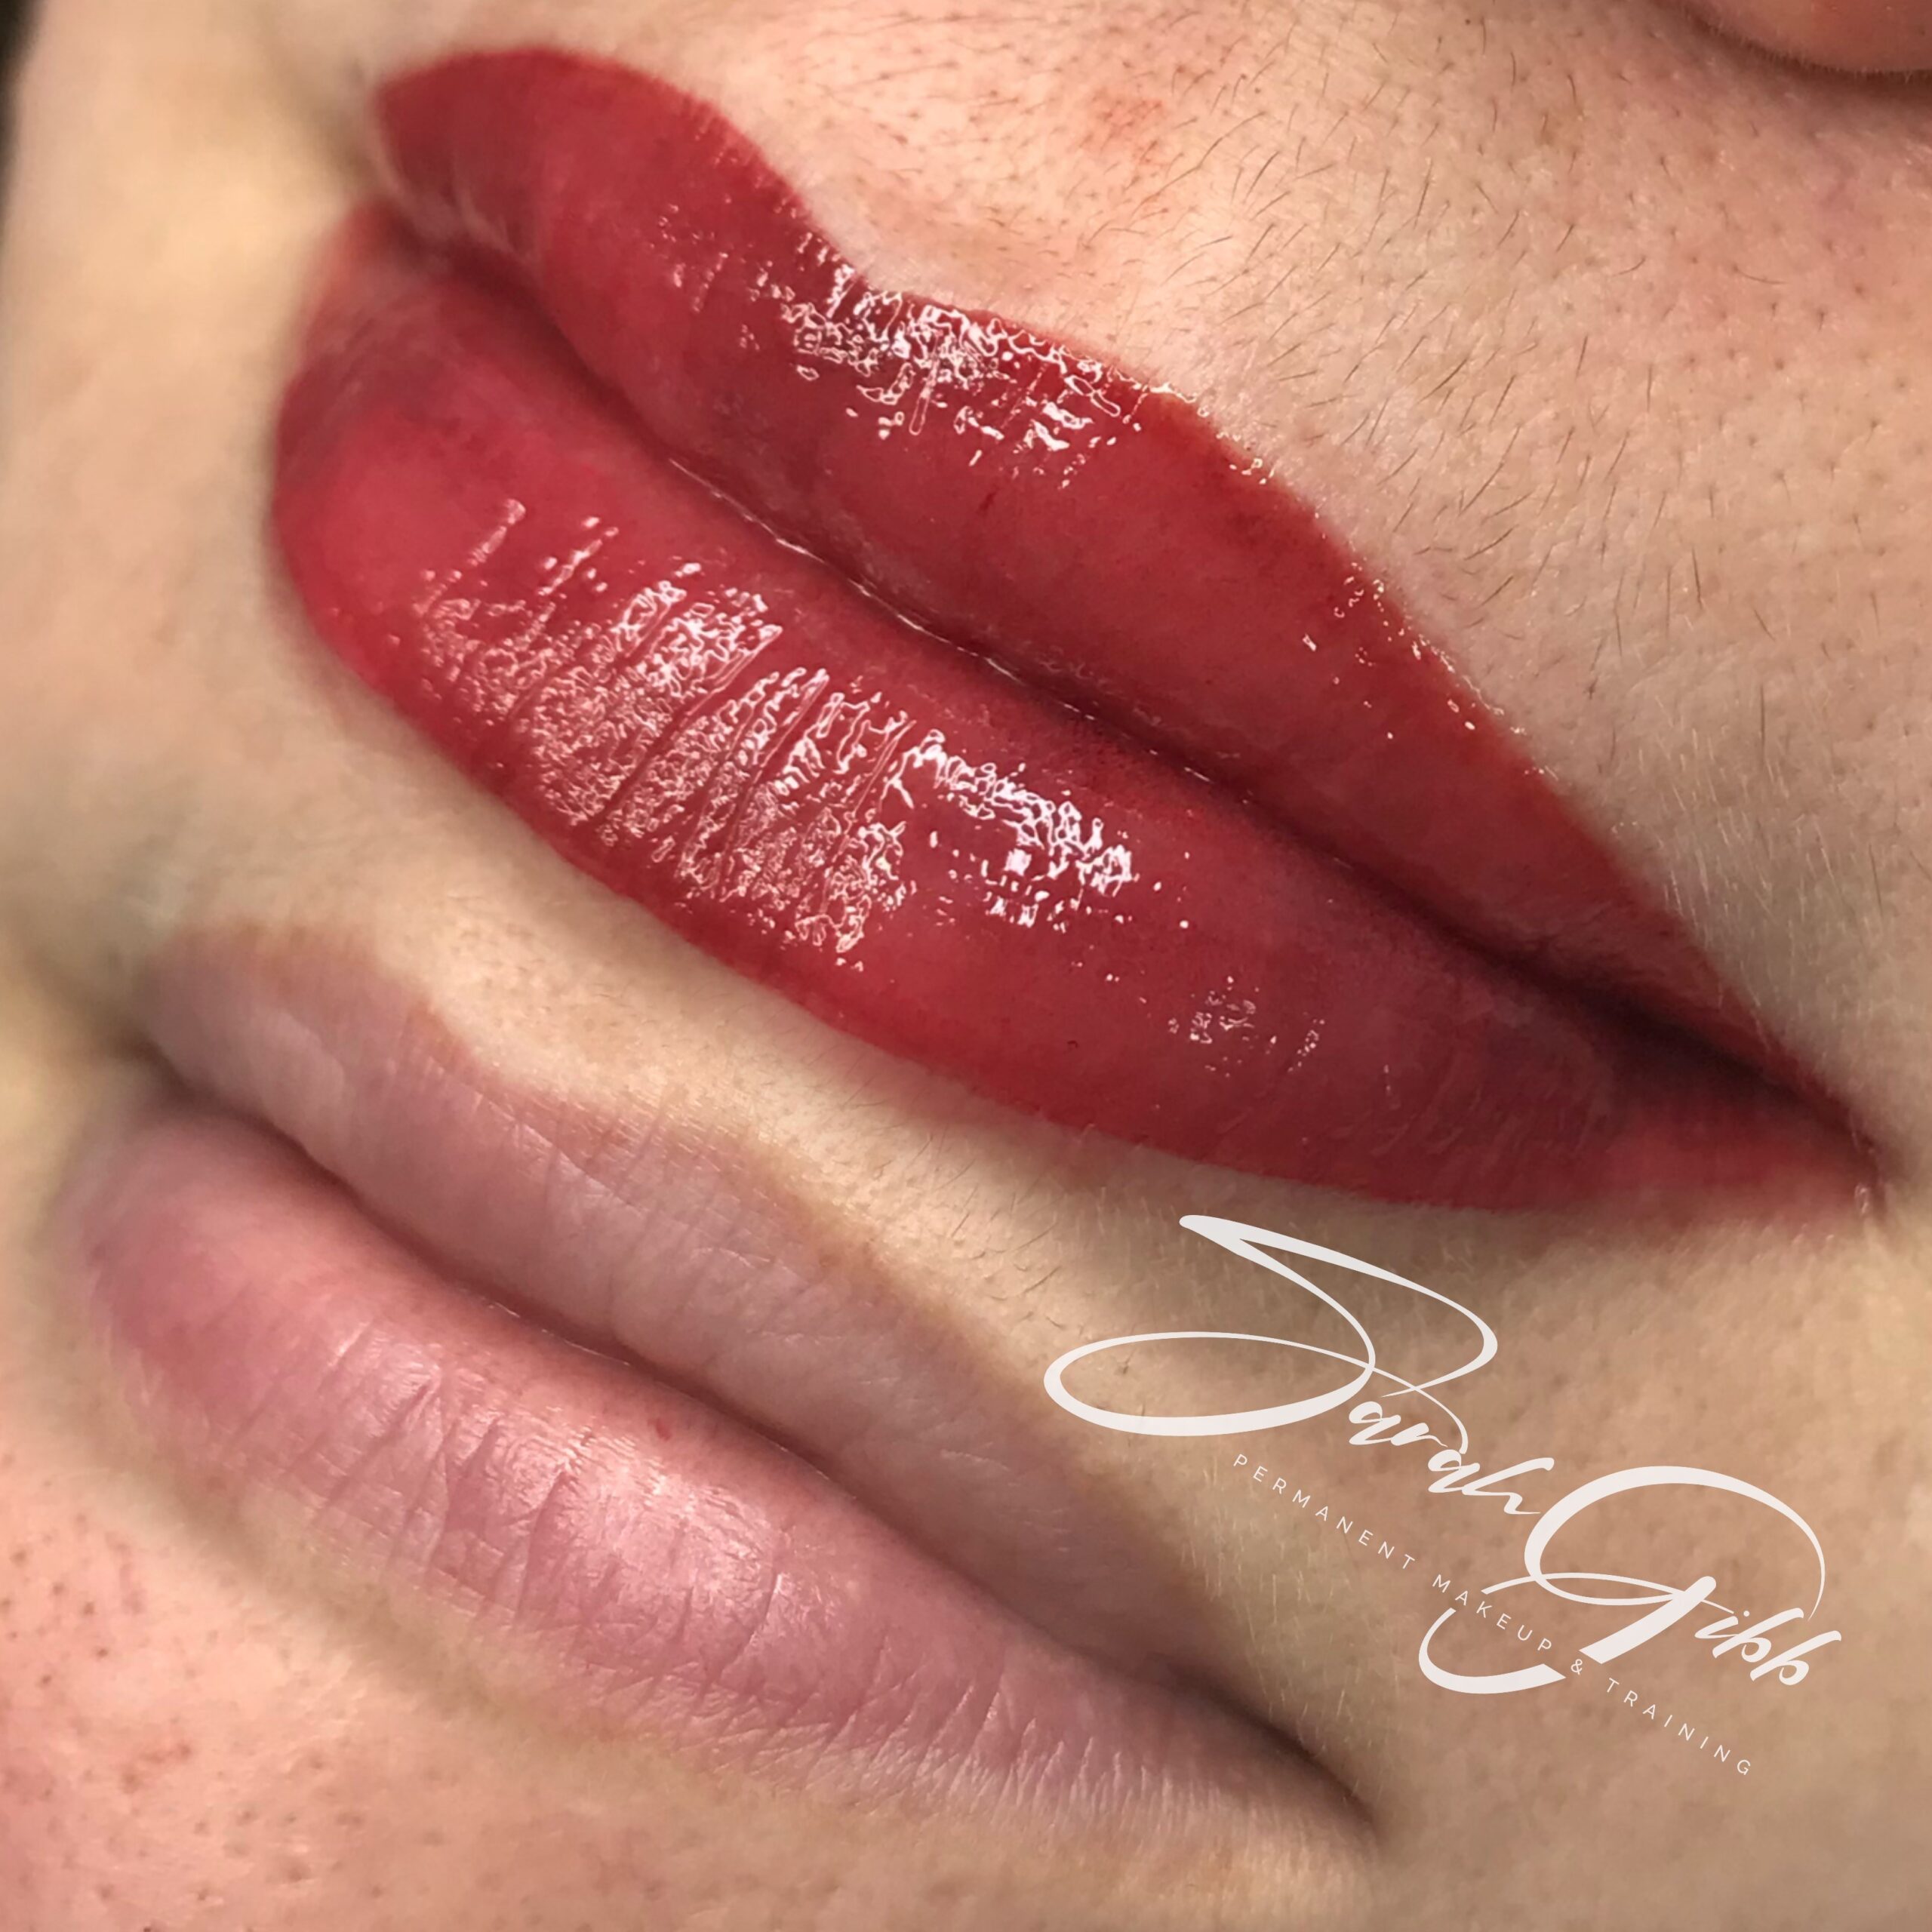 Permanent Makeup for Lips. Lip Blush Tattoo. Sarah Gibb